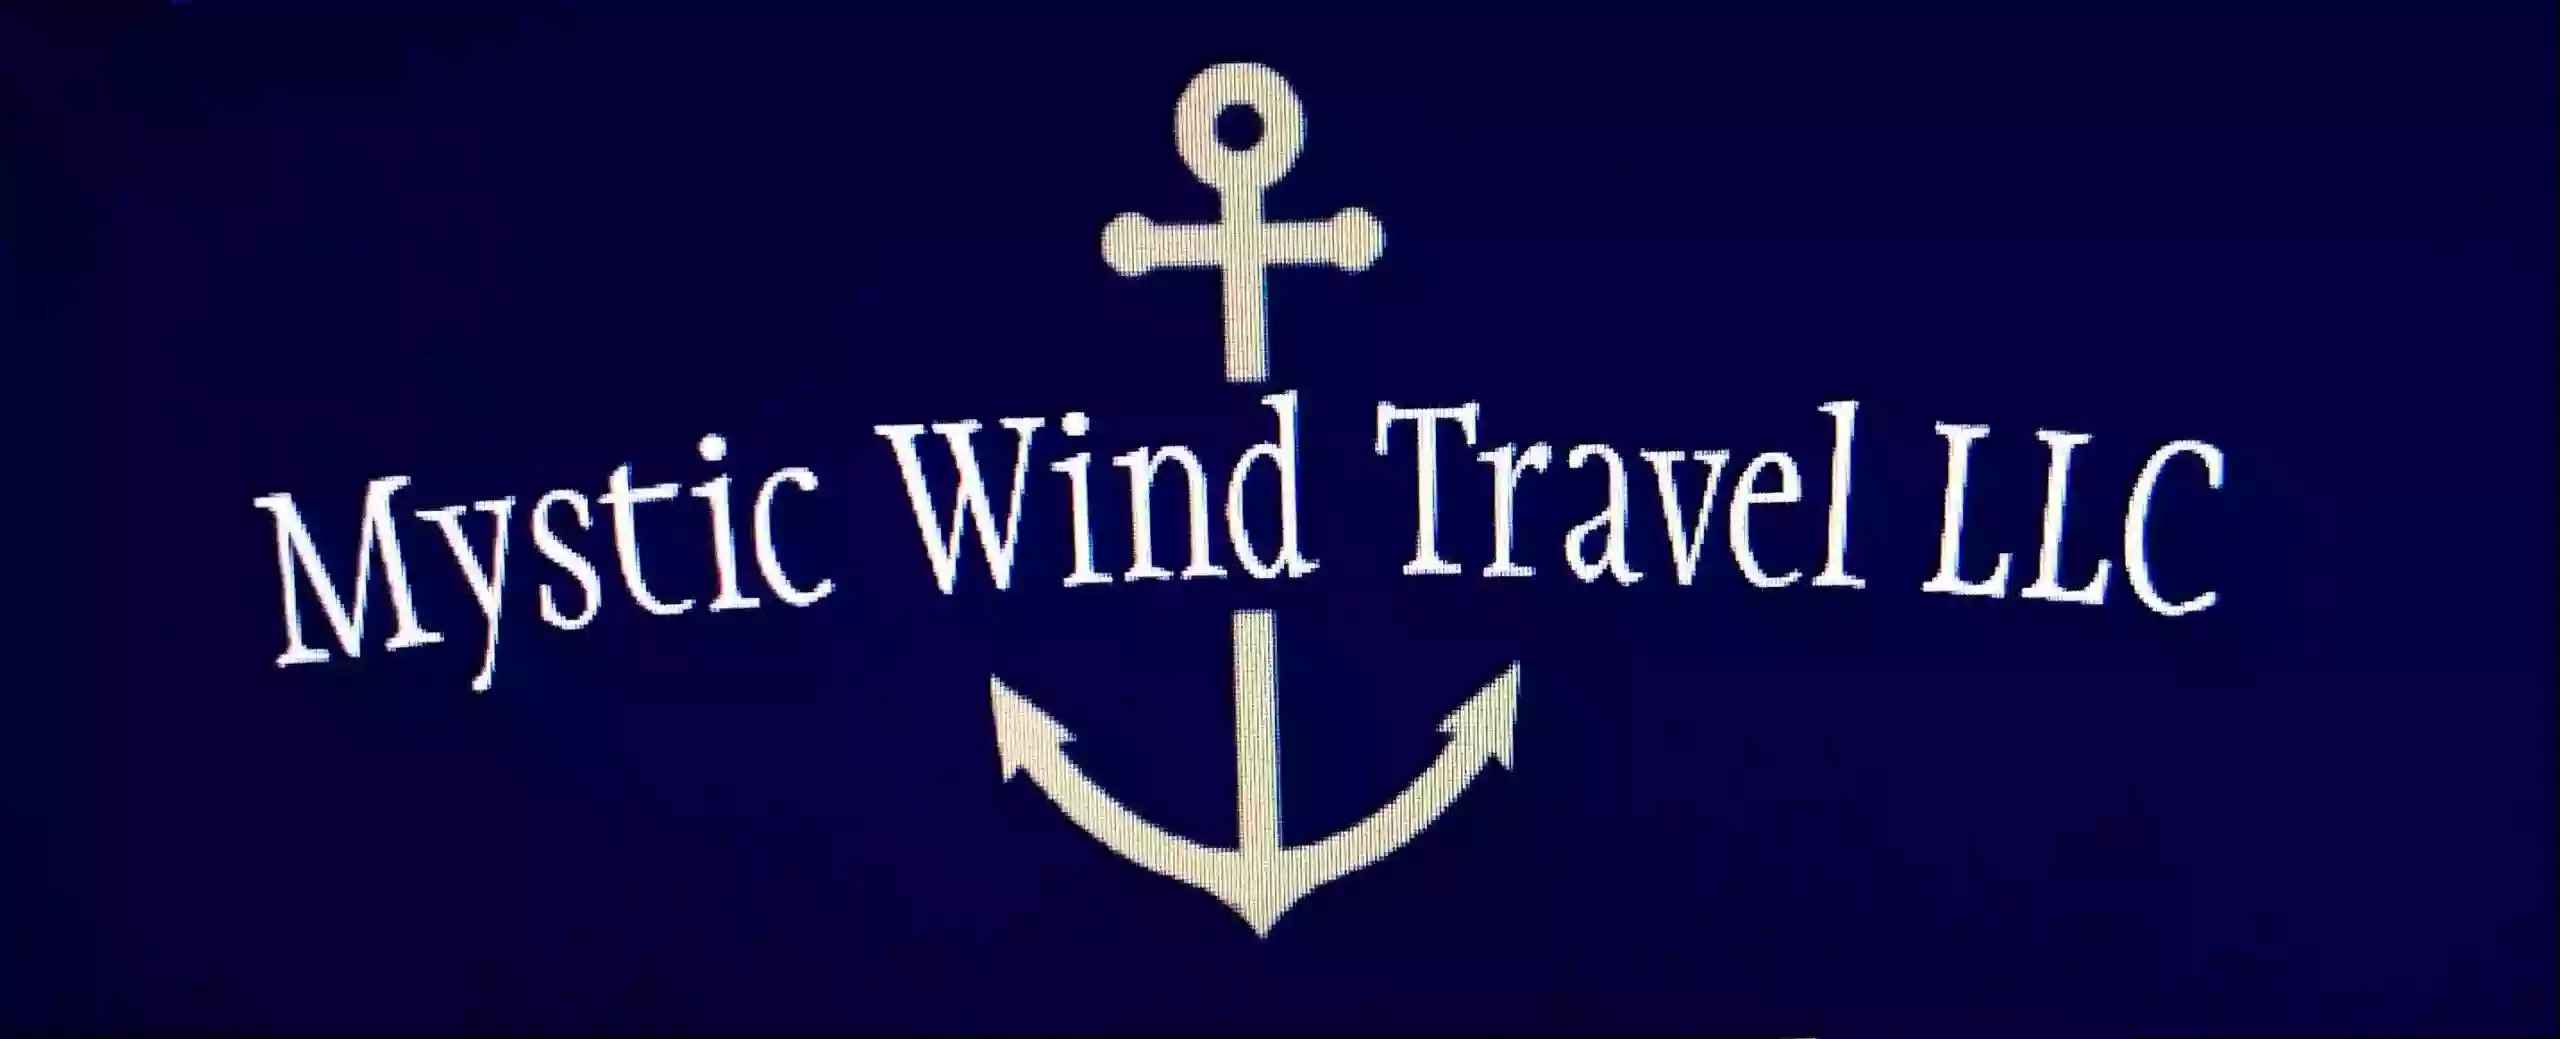 Mystic Wind Travel LLC